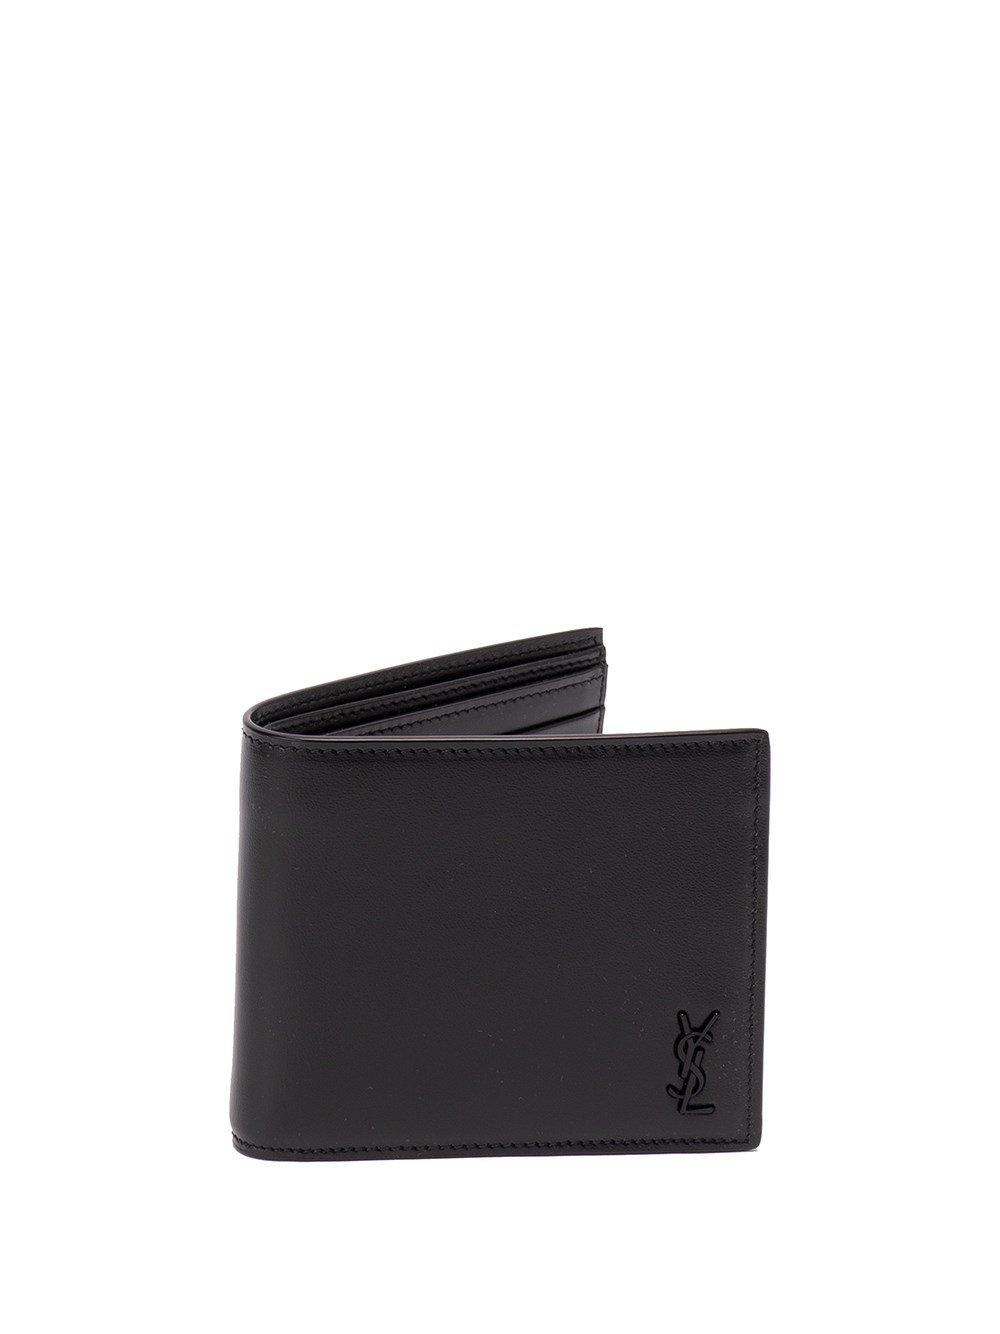 Saint Laurent Tiny `cassandre East/west` Leather Wallet in Black for Men